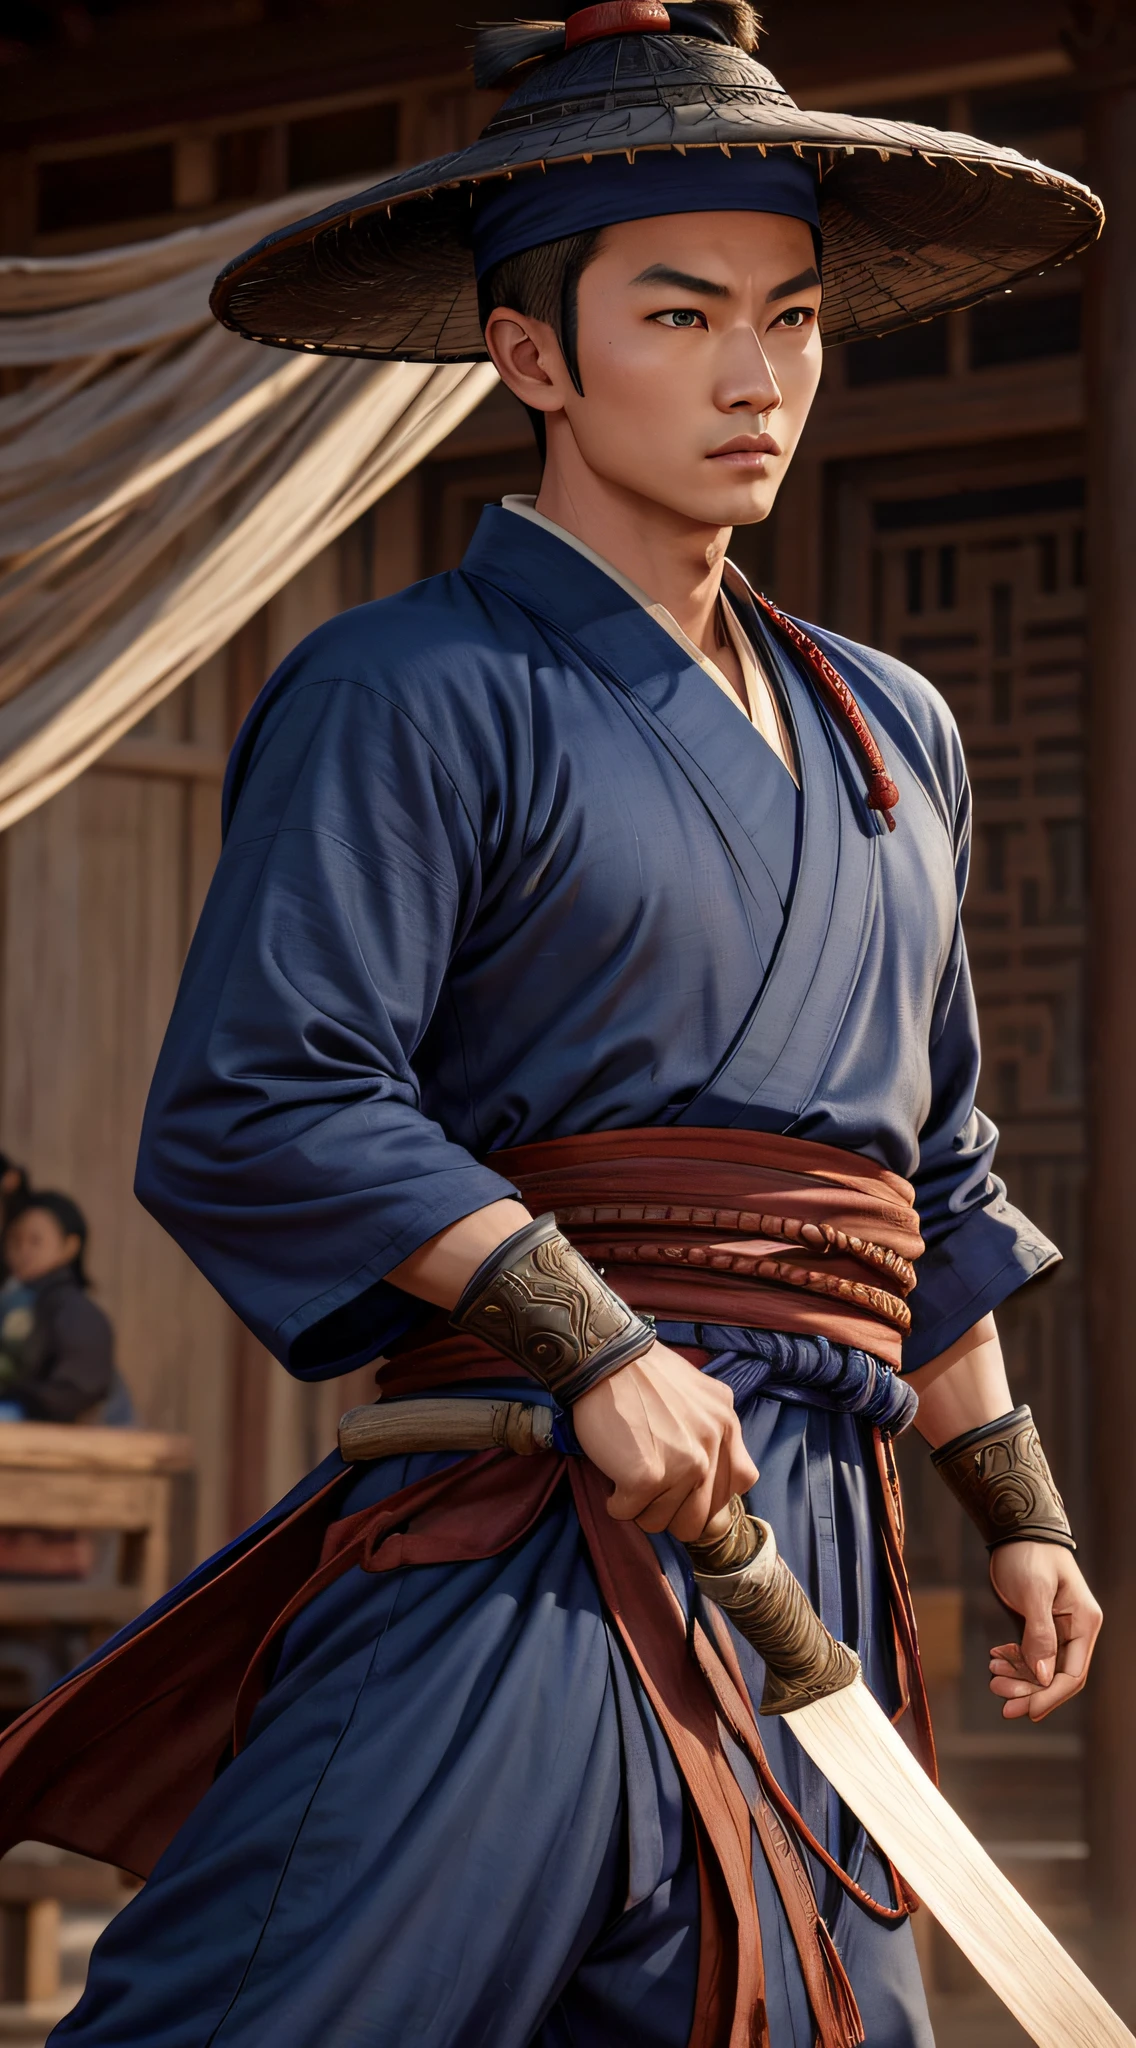 actor ((Simu Liu)) as Kung Lao from Mortal Kombat, in the Shaolin temple, dark blue bamboo_hat, bald head, Shaolin monk robe, intricate, high detail, sharp focus, dramatic, photorealistic painting art by greg rutkowski